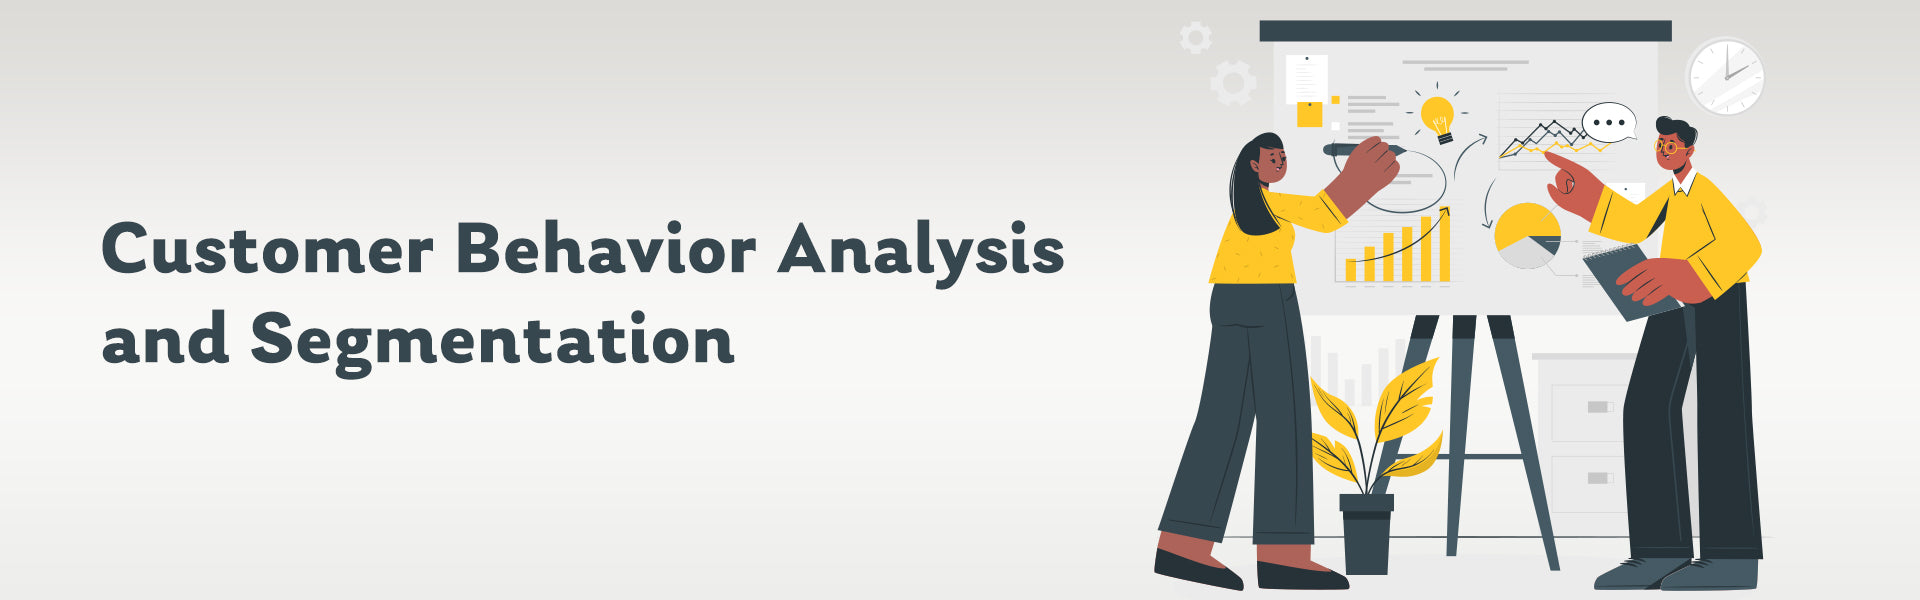 Customer Behavior Analysis & Segmentation - Full Article